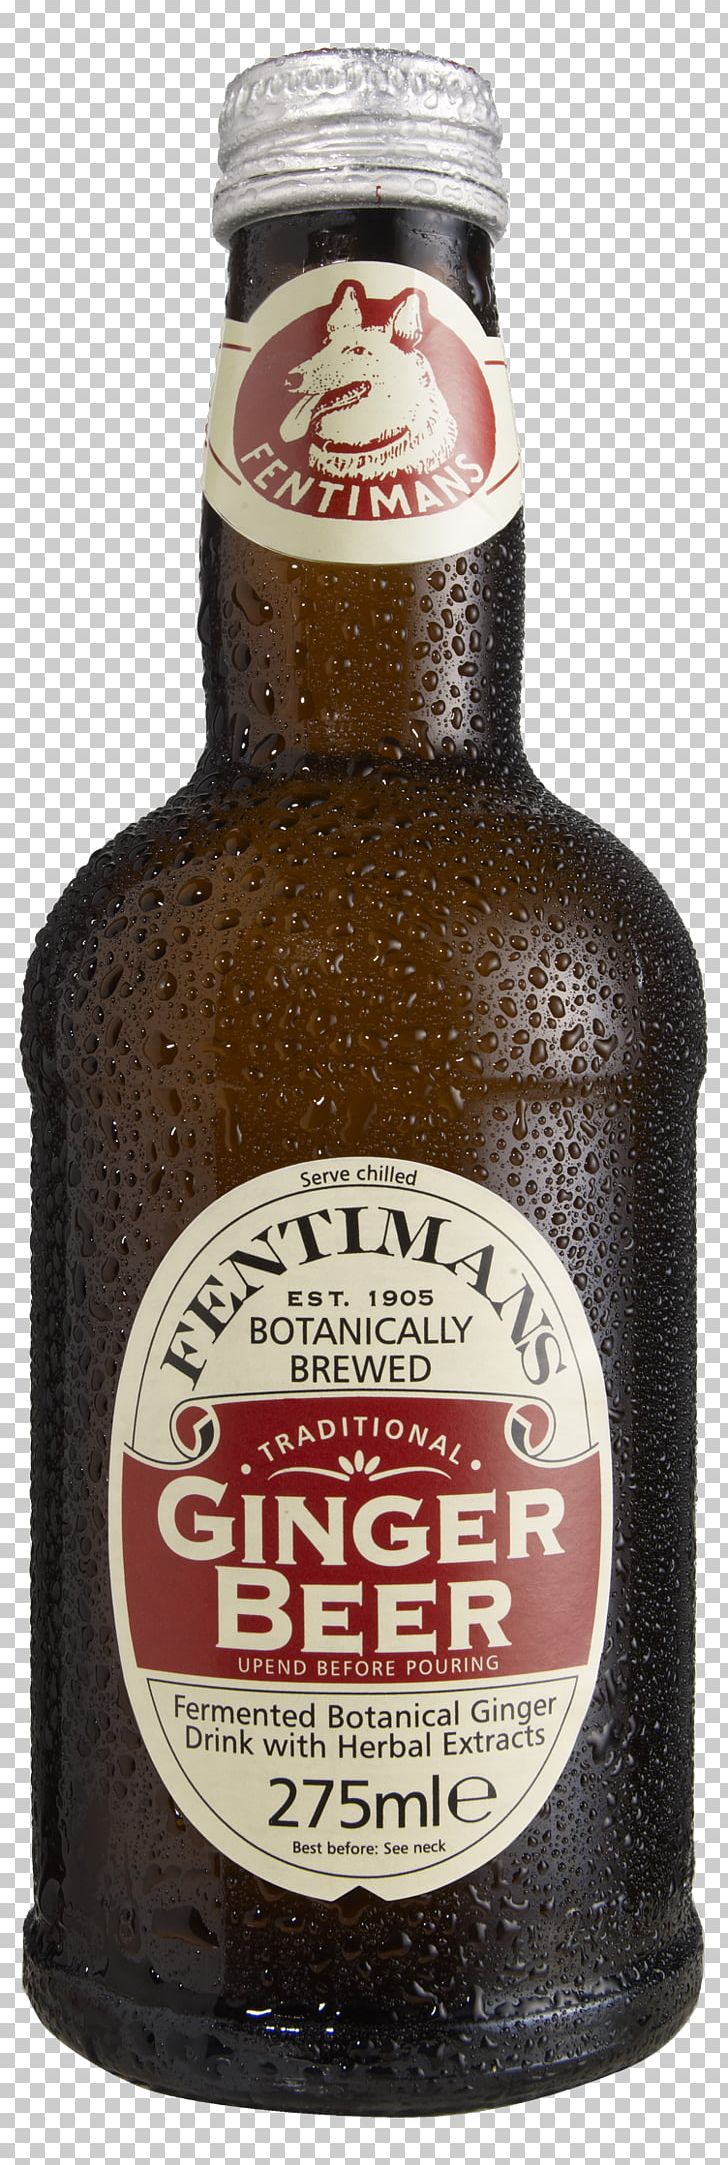 Ginger Beer Fizzy Drinks Drink Mixer Lemonade PNG, Clipart, Ale, Beer, Beer Bottle, Beer Brewing Grains Malts, Bottle Free PNG Download